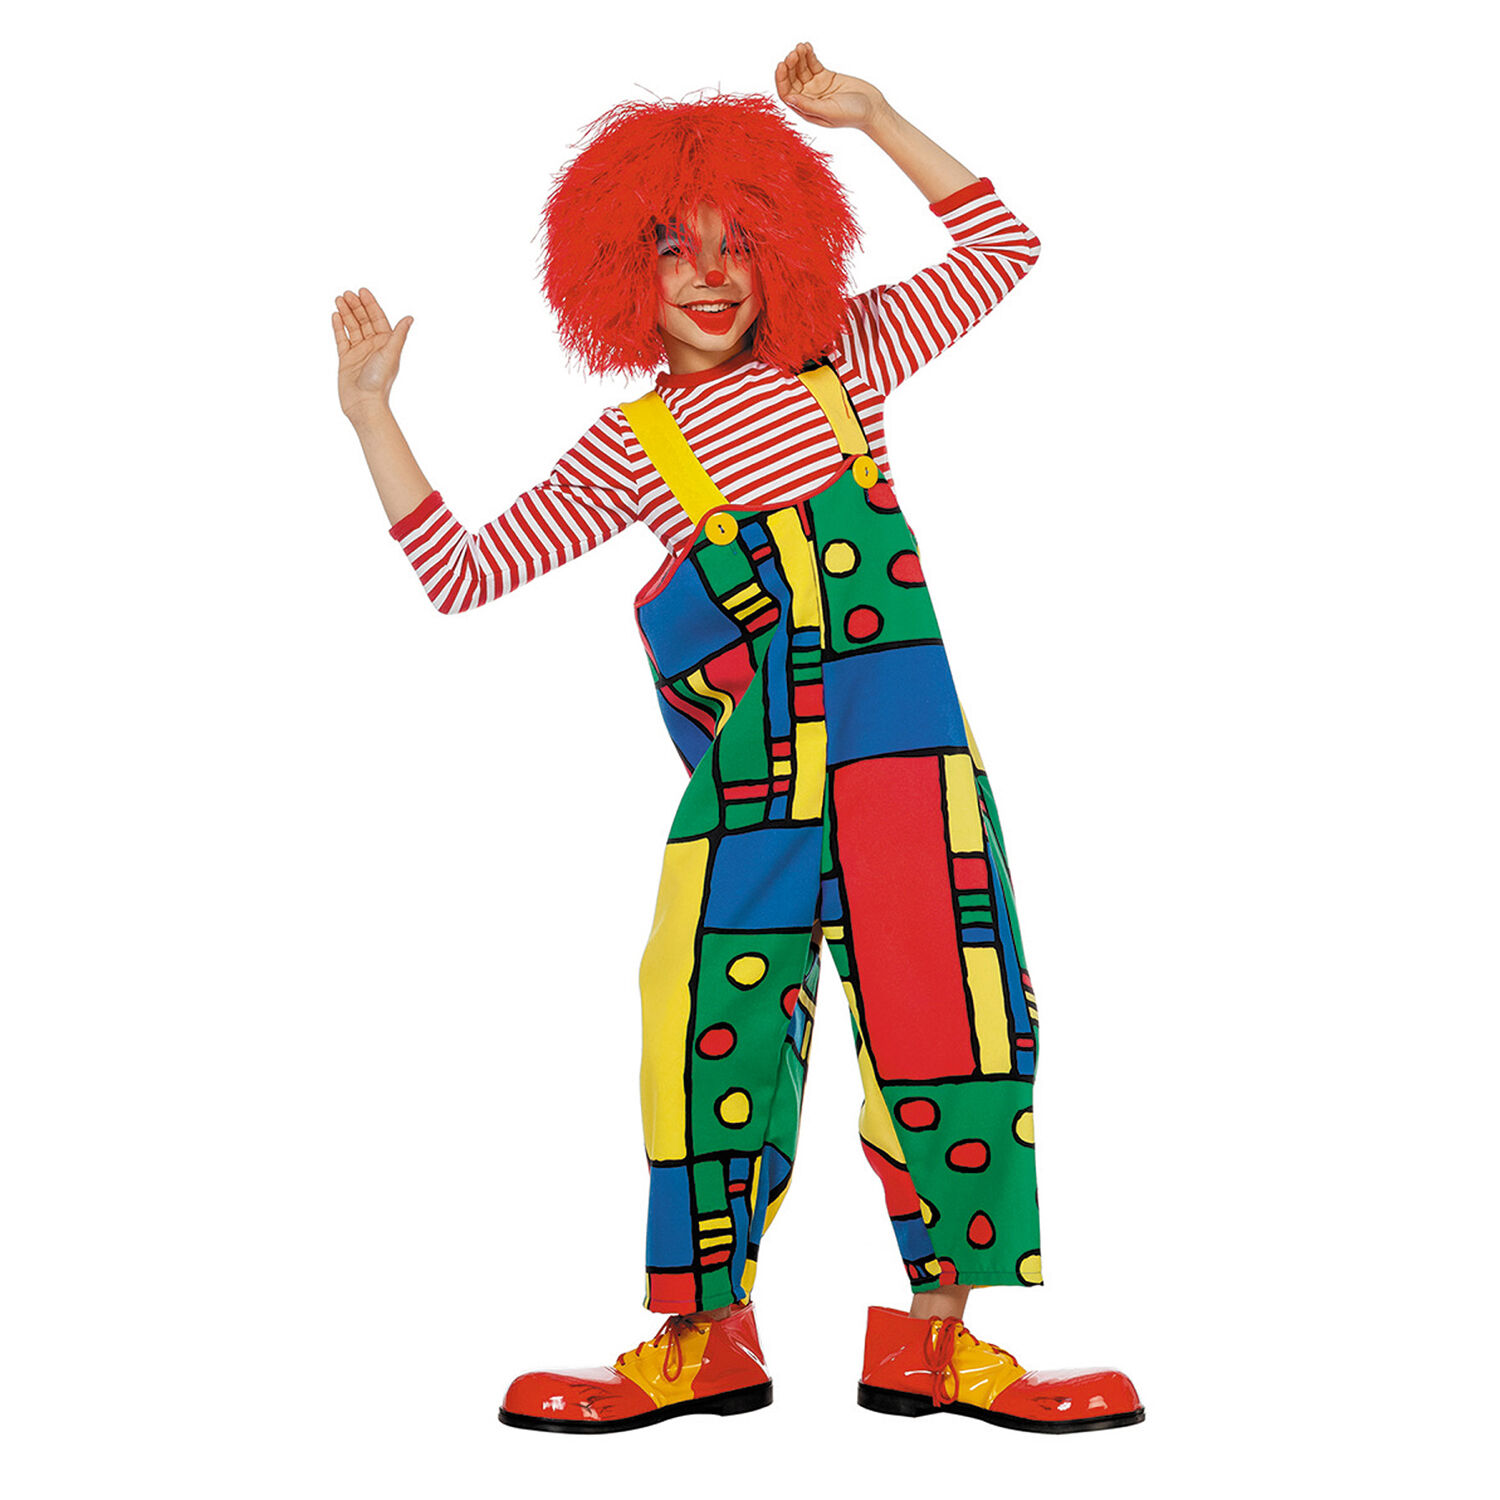 NEU Kinder-Kostm Clown-Latzhose Mondrian, bunt, Gr. 116